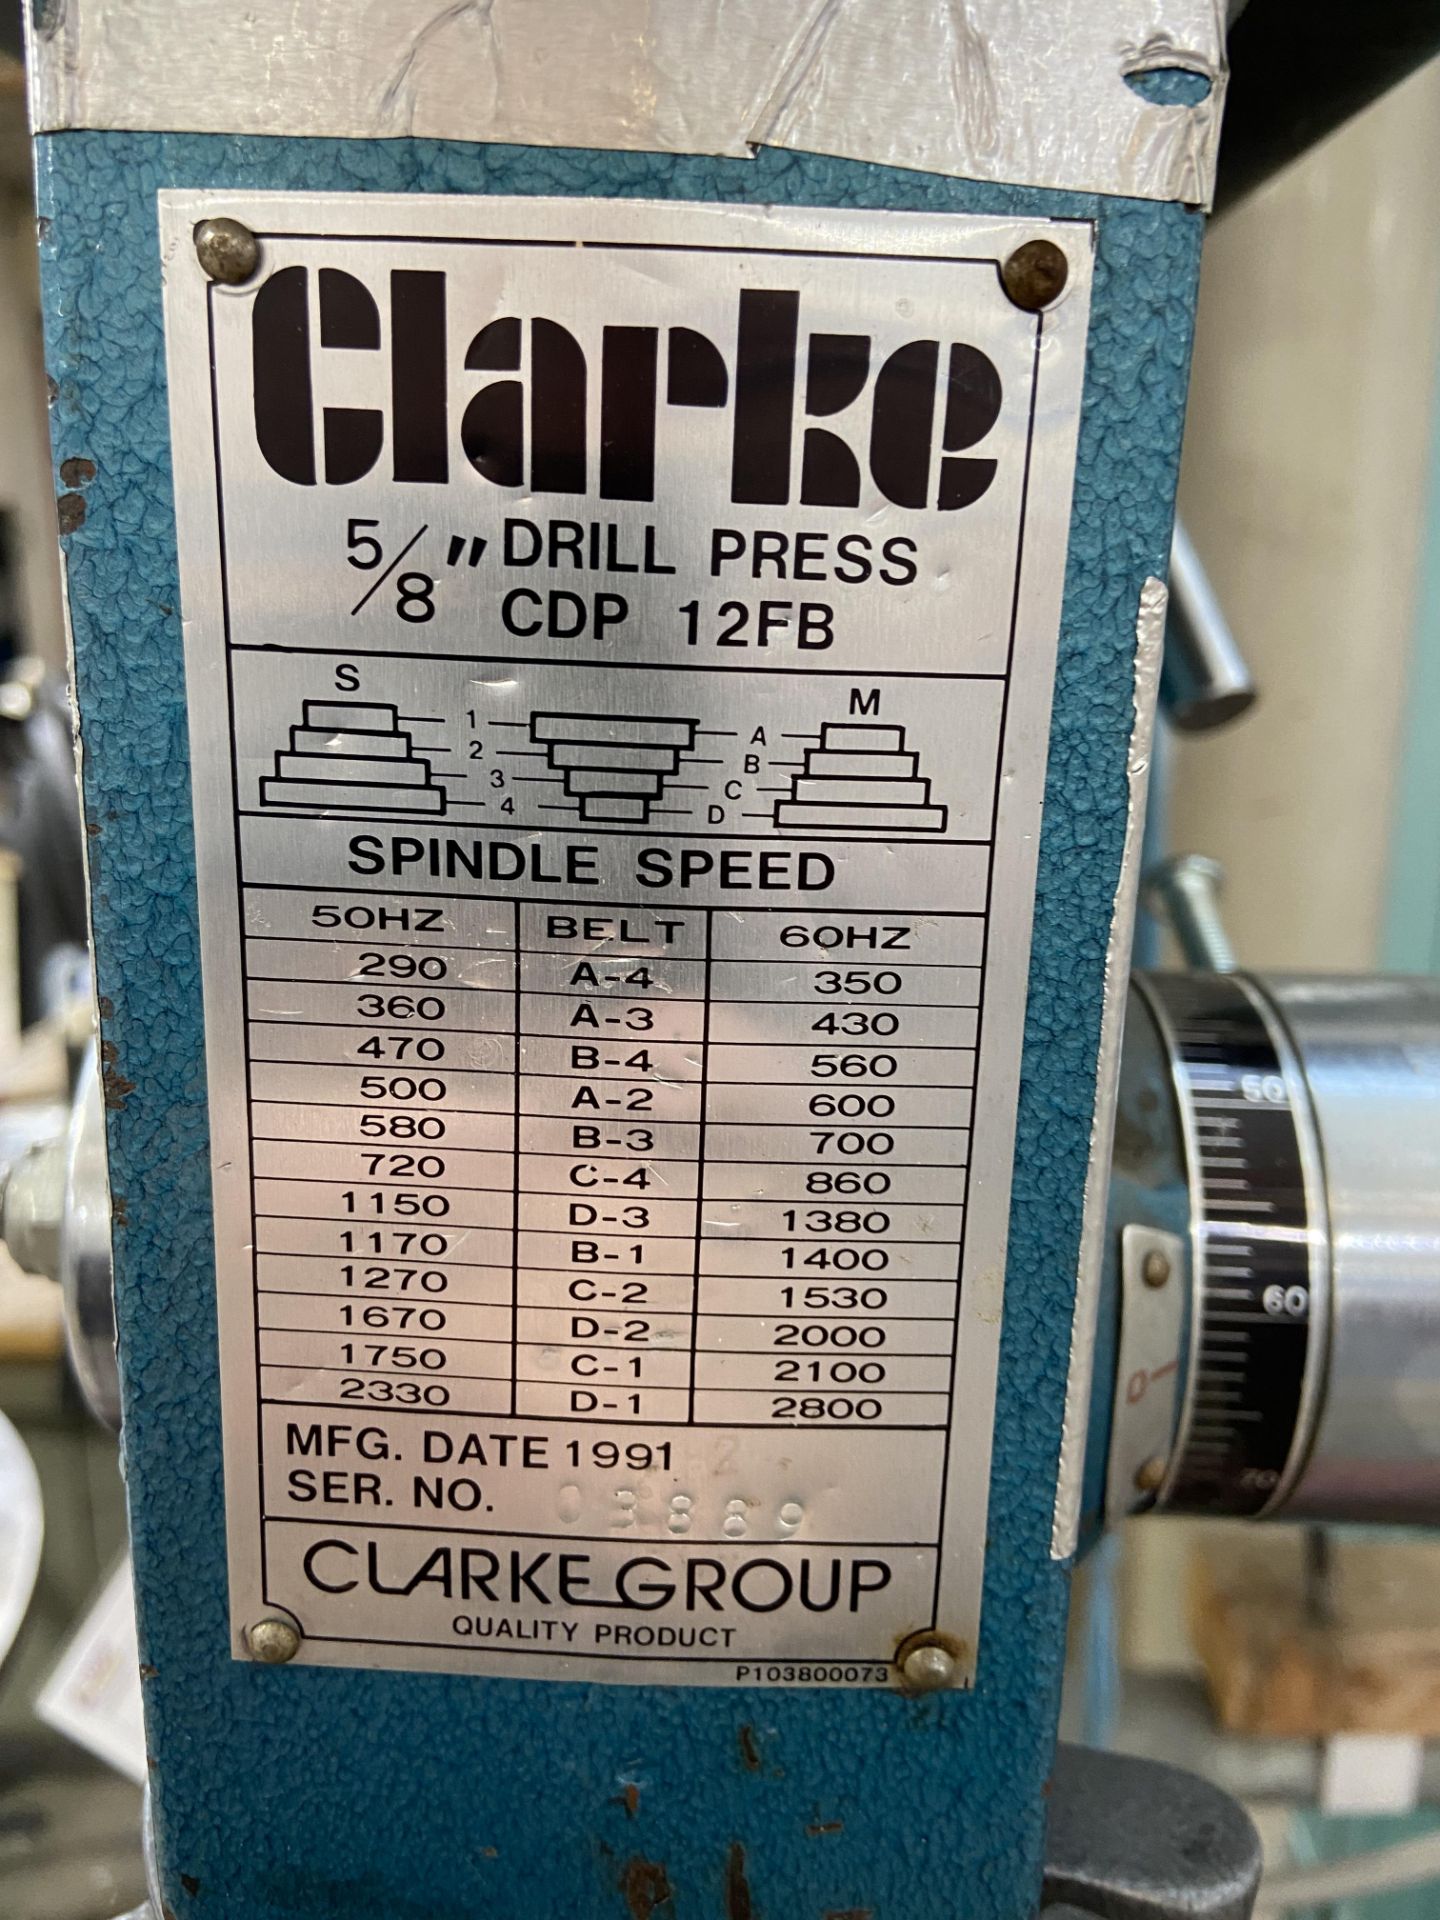 Clarke floor standing drill press 5/8", Model: CDP12FB, Serial No: 03889 (1991) - Image 4 of 4